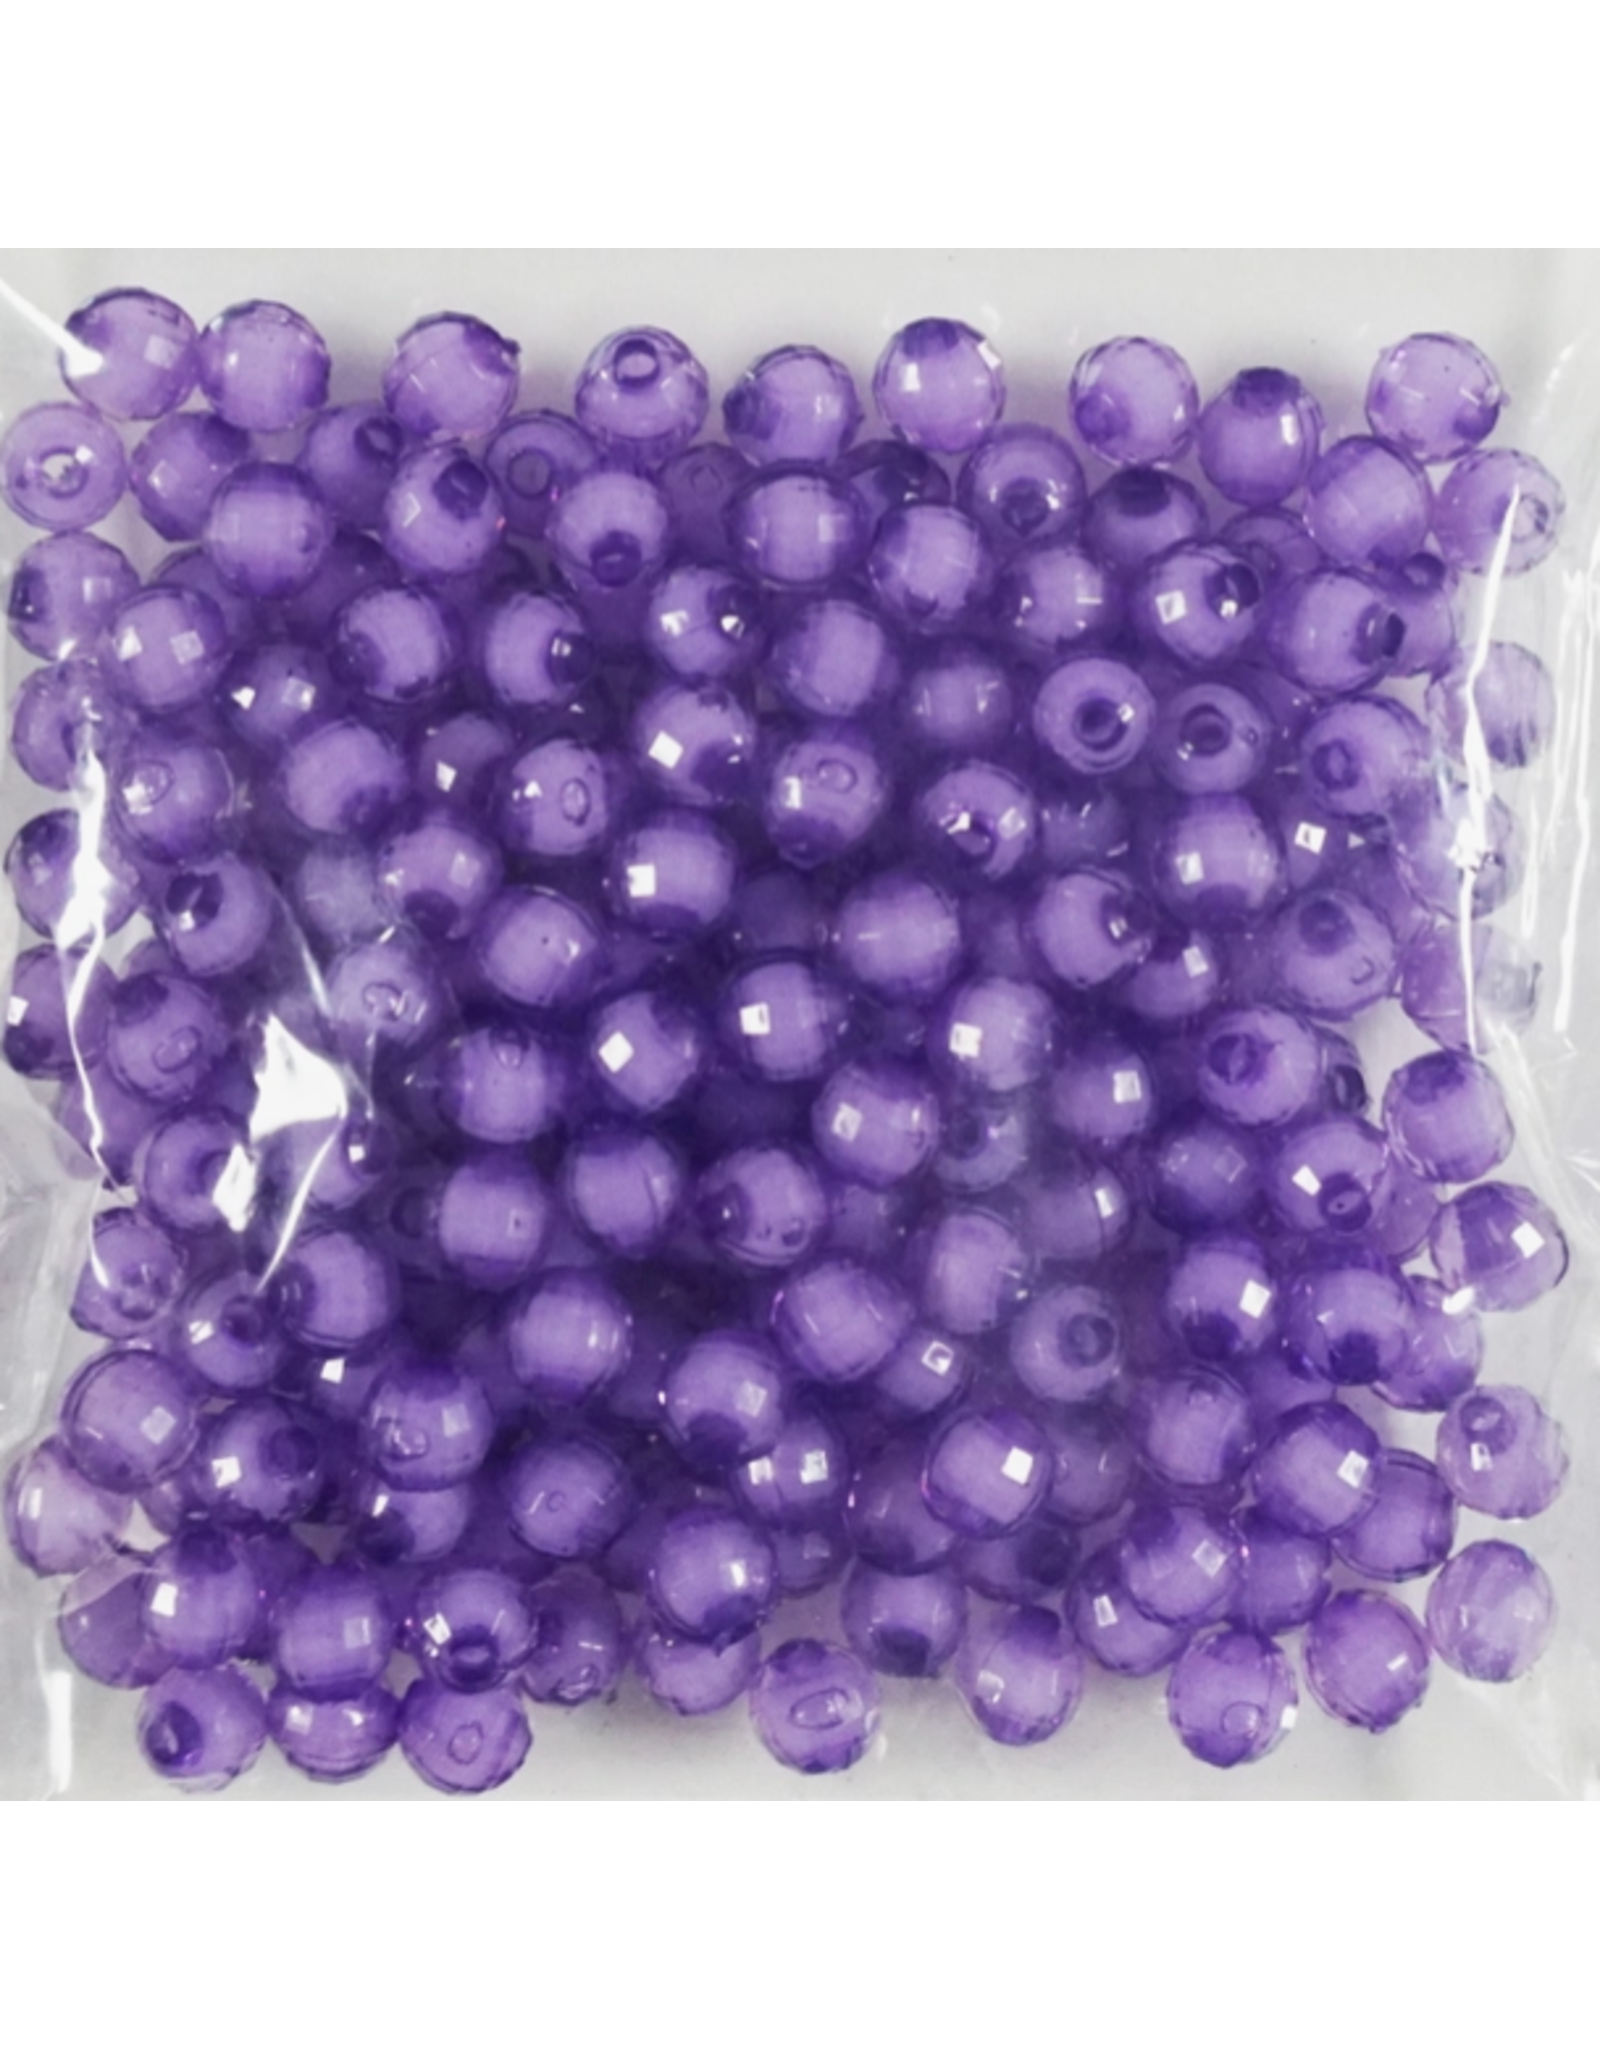 50 Qty 20mm Colorful Purple Theme Mixed Beads - Acrylic Mixed Beads -  Chunky Beads #134